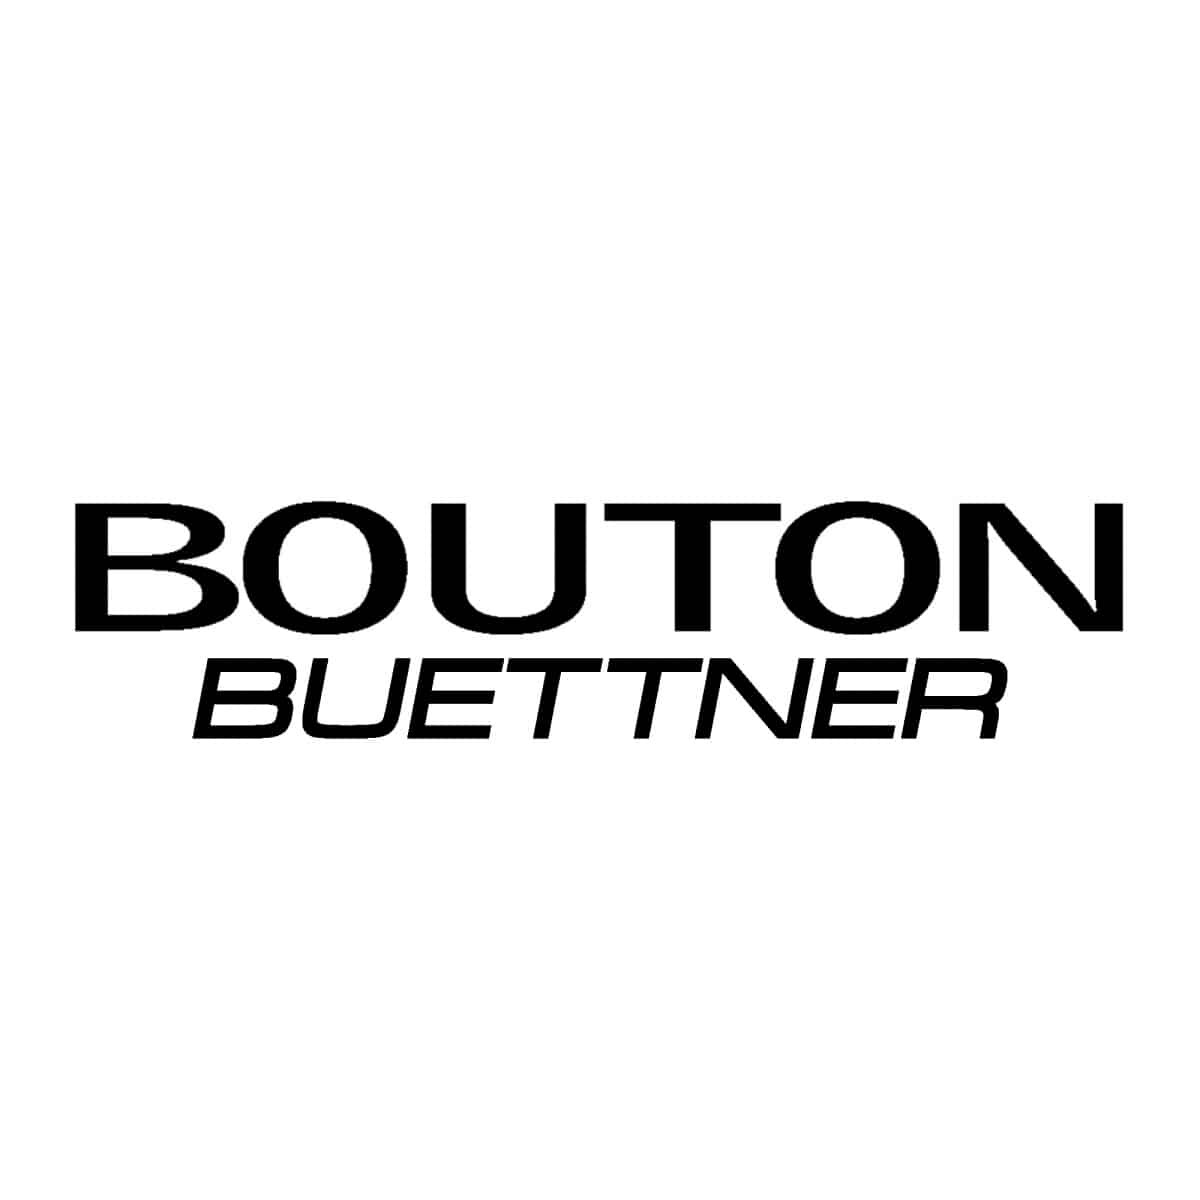 Buettner